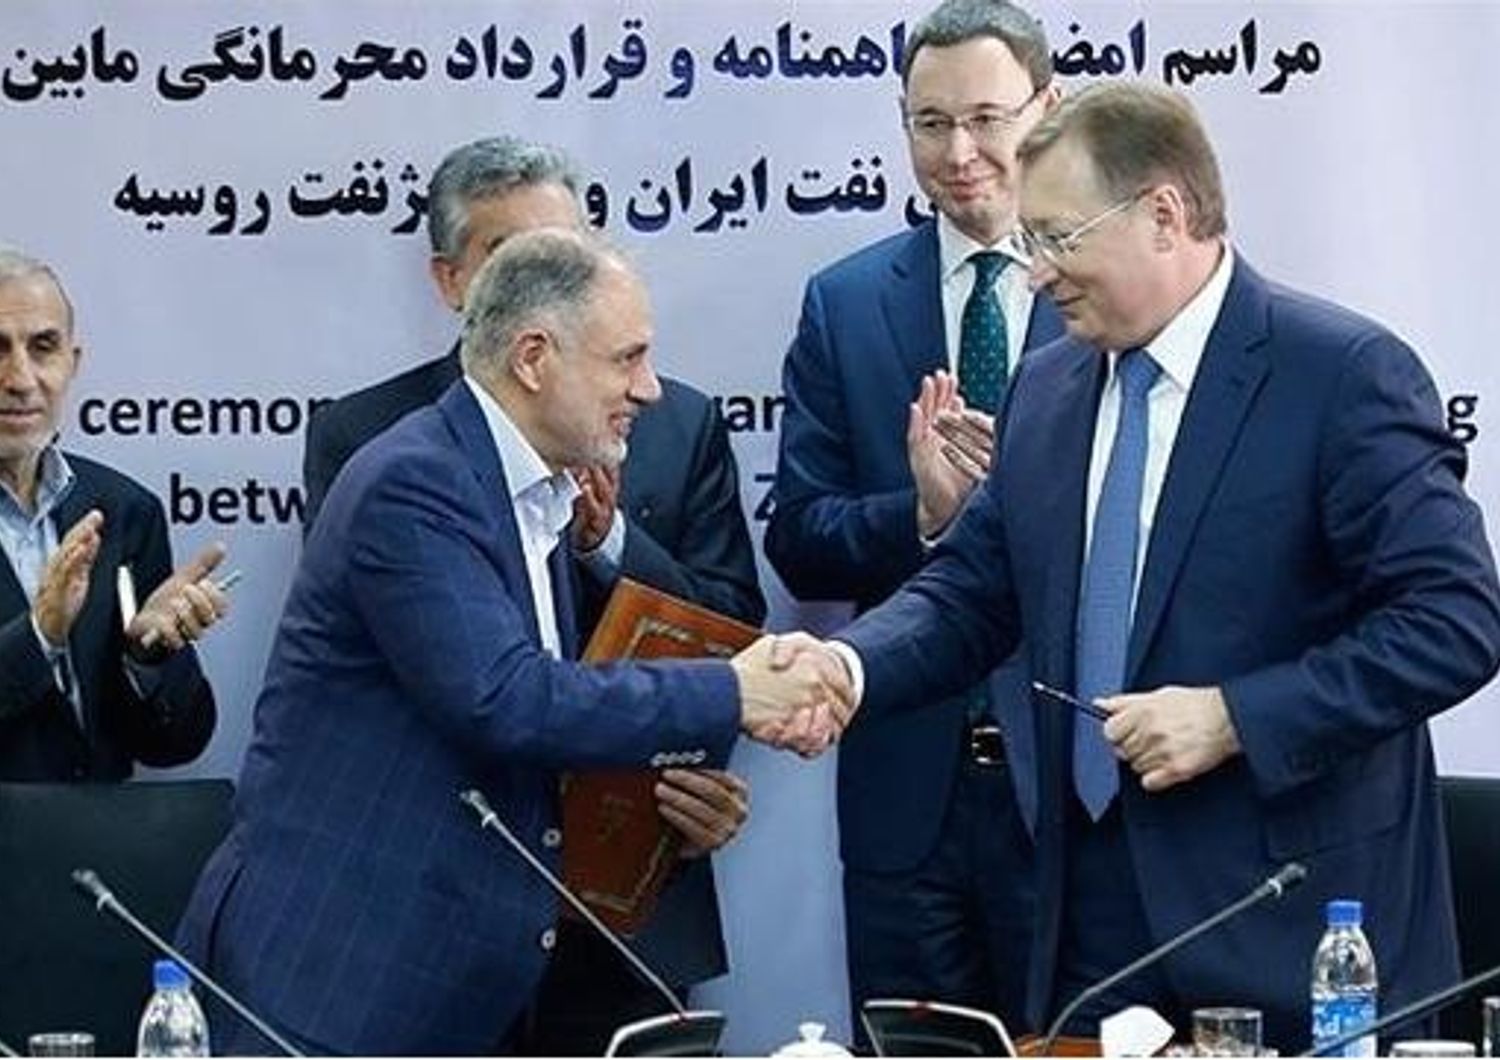 &nbsp;Iran Russia accordo tra Ali Kardor direttore esecutivo di Nioc e Sergey Kudryashov direttore esecutivo di Zarubezhneft - twitter